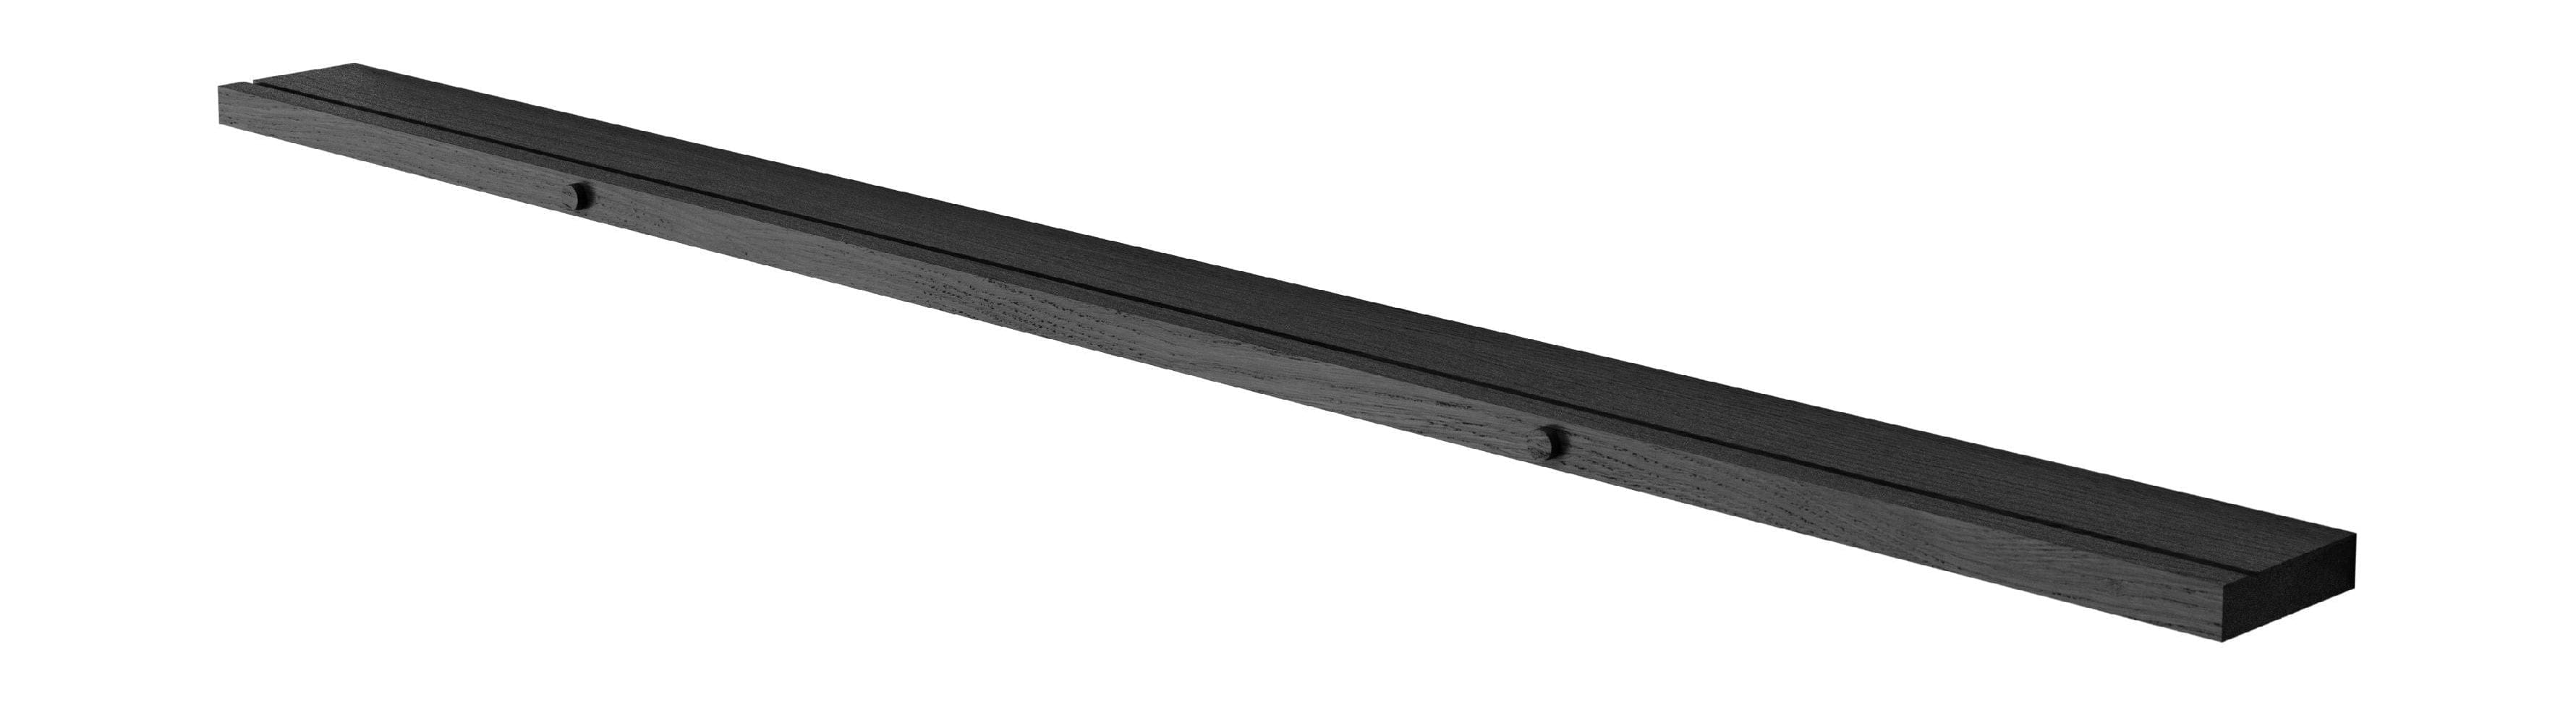 Moebe GALLERI HOLP BILDLIST 115 cm, svart